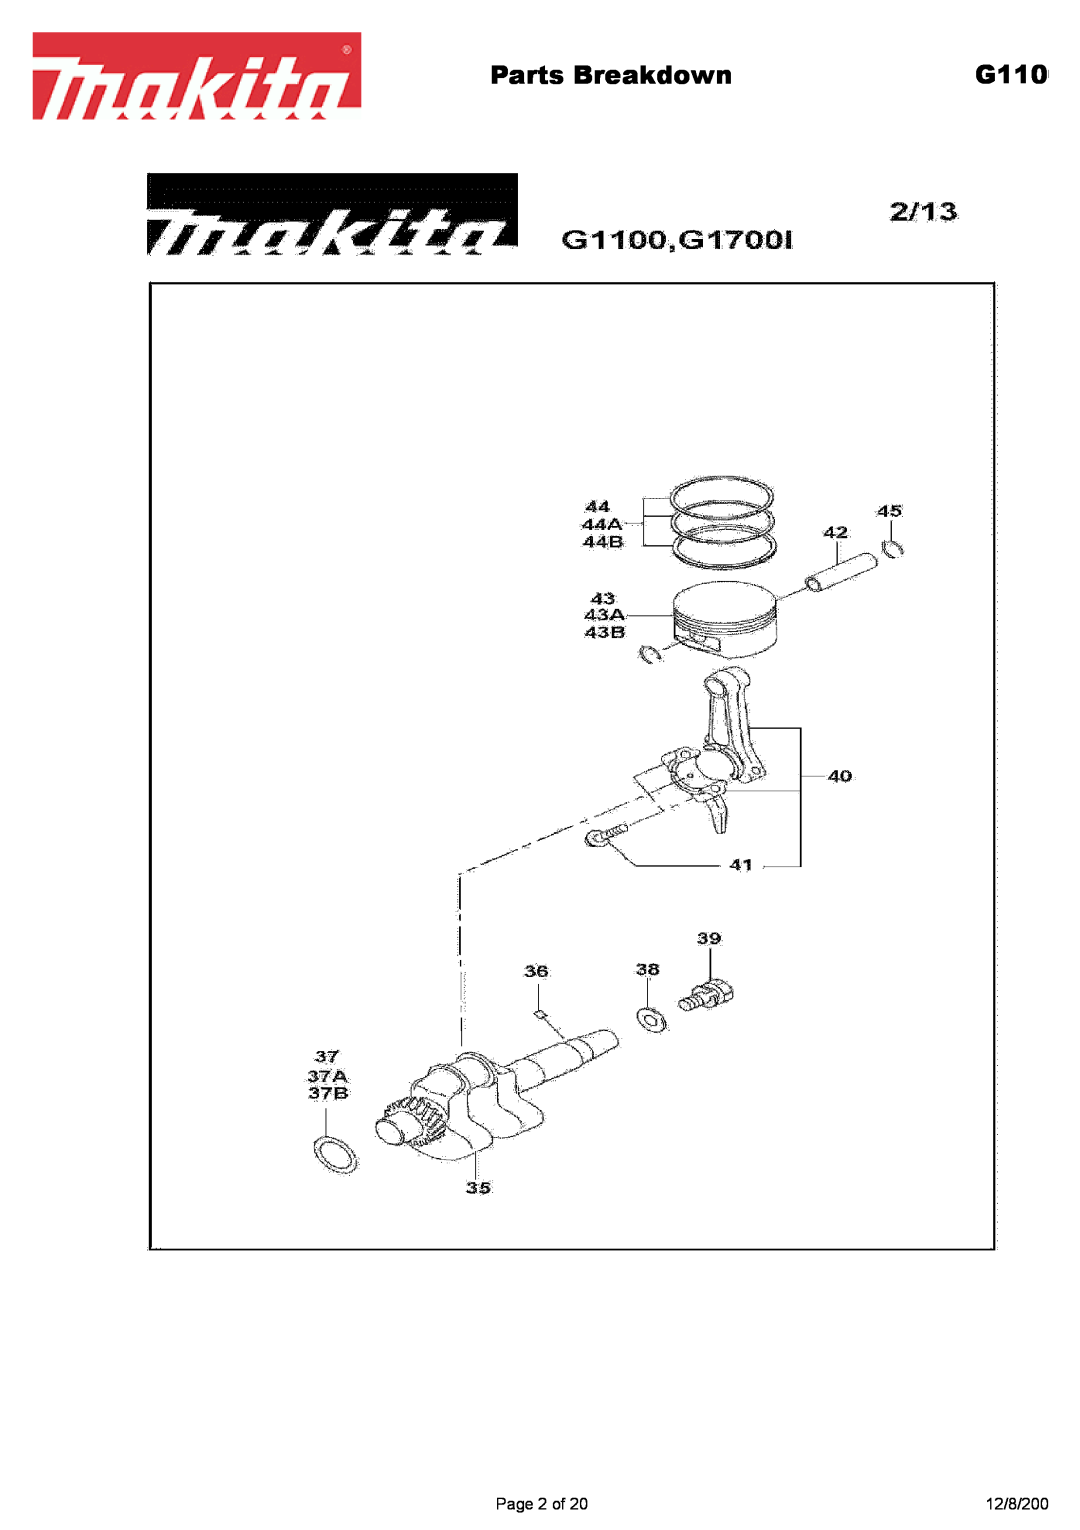 Makita G1700i manual Parts Breakdown, G110, Page 2 of, 12/8/200 